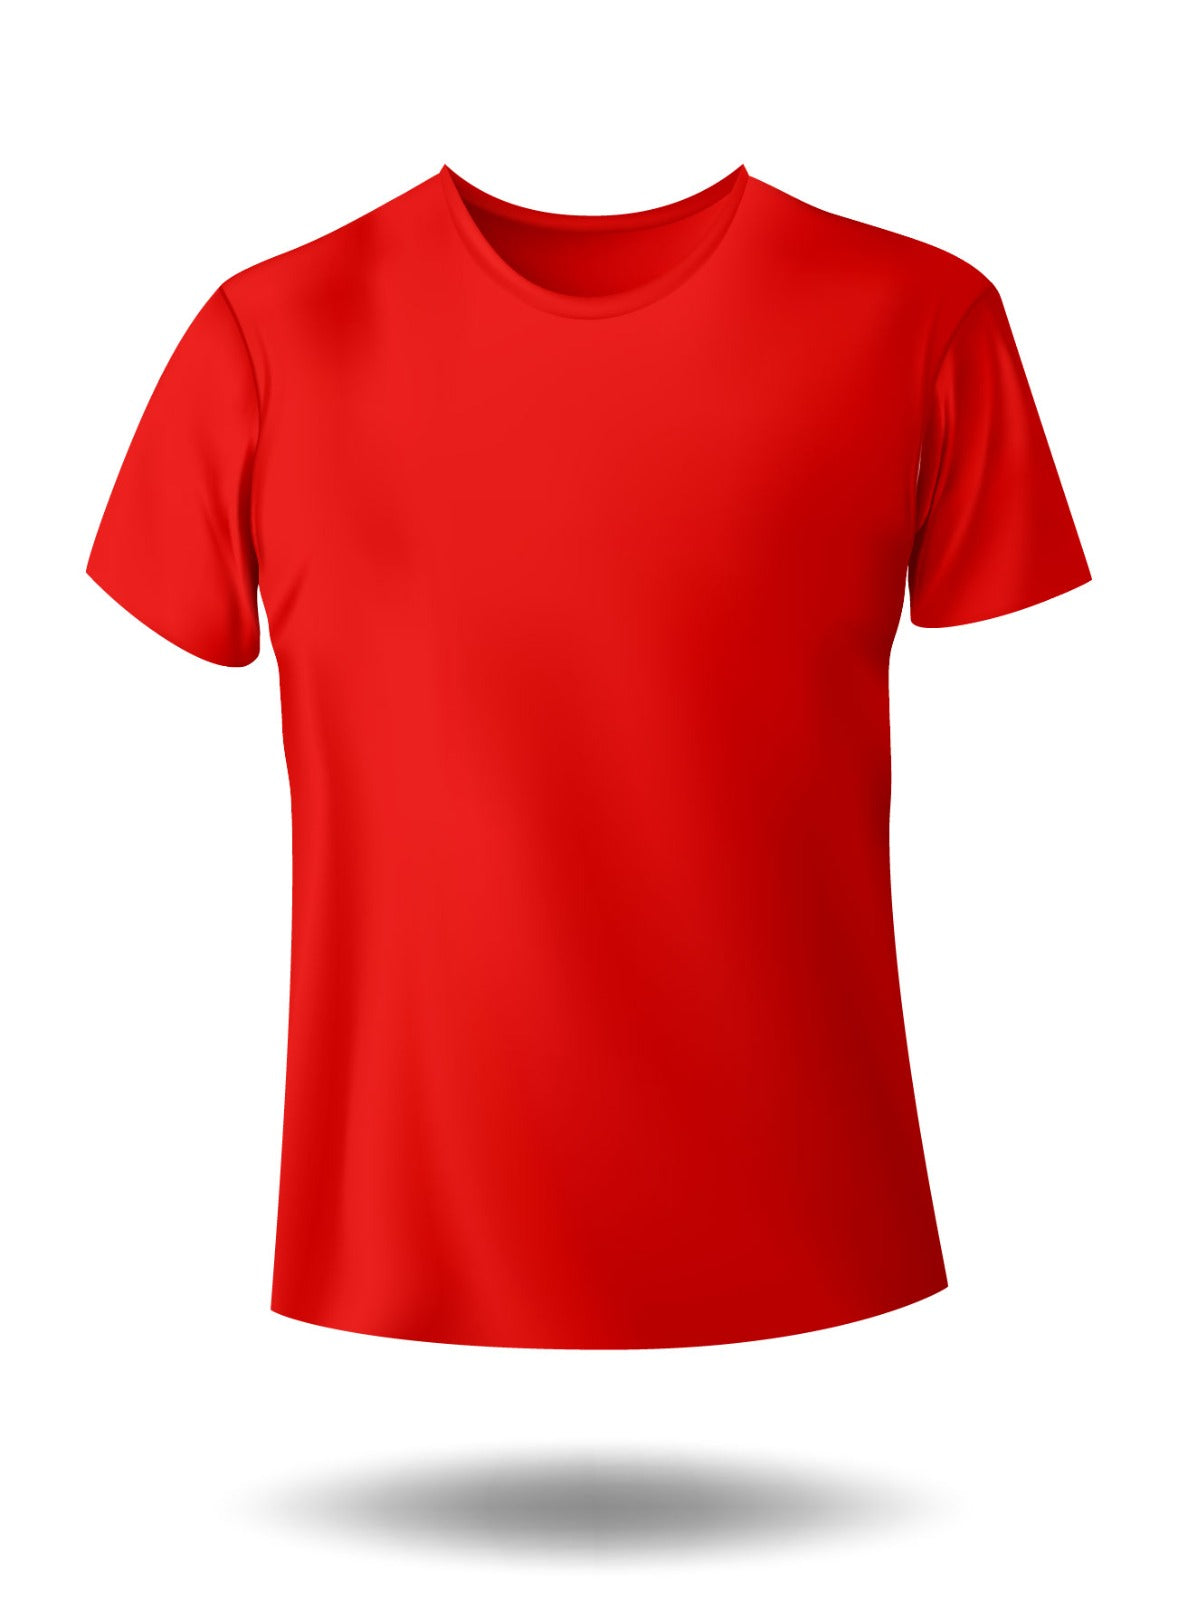 Red t-shirt | plain | for kids